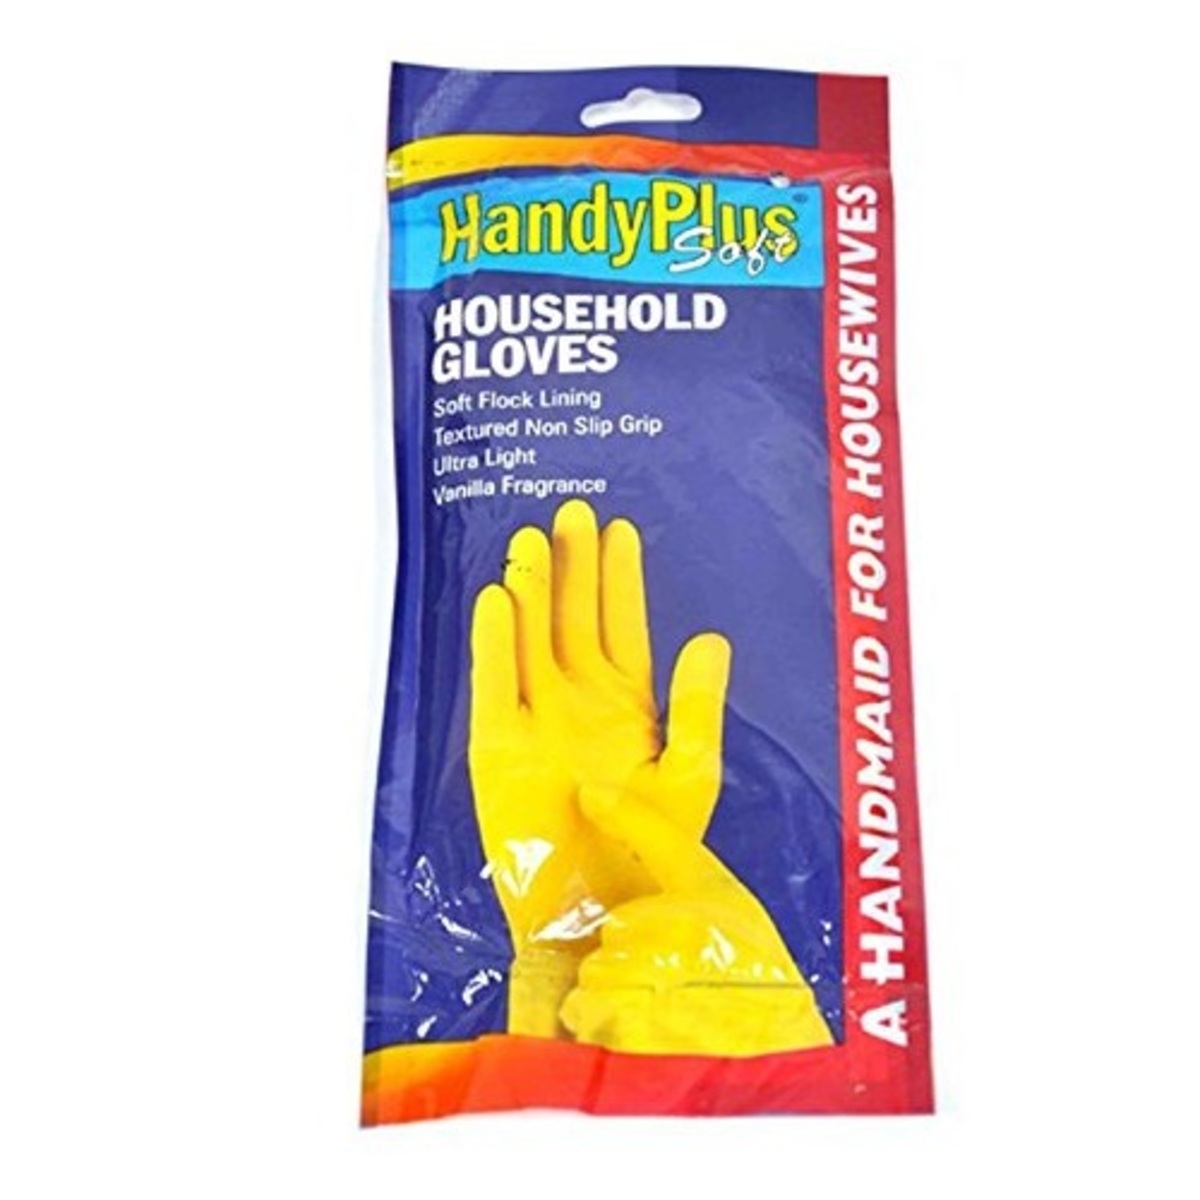 Handy Plus House Hold Gloves Medium